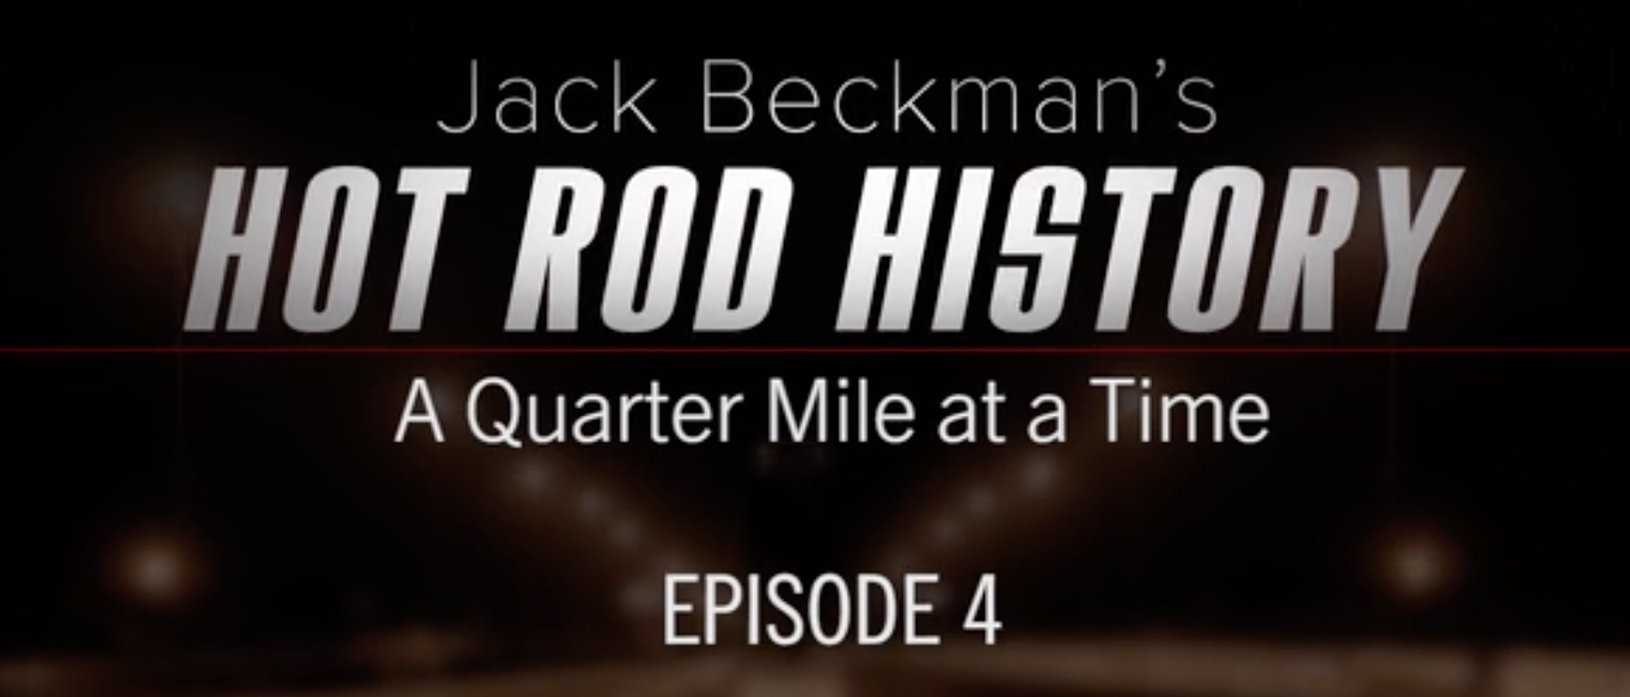 Jack Beckman’s Hot Rod History a Quarter-Mile at a Time – Episode 4